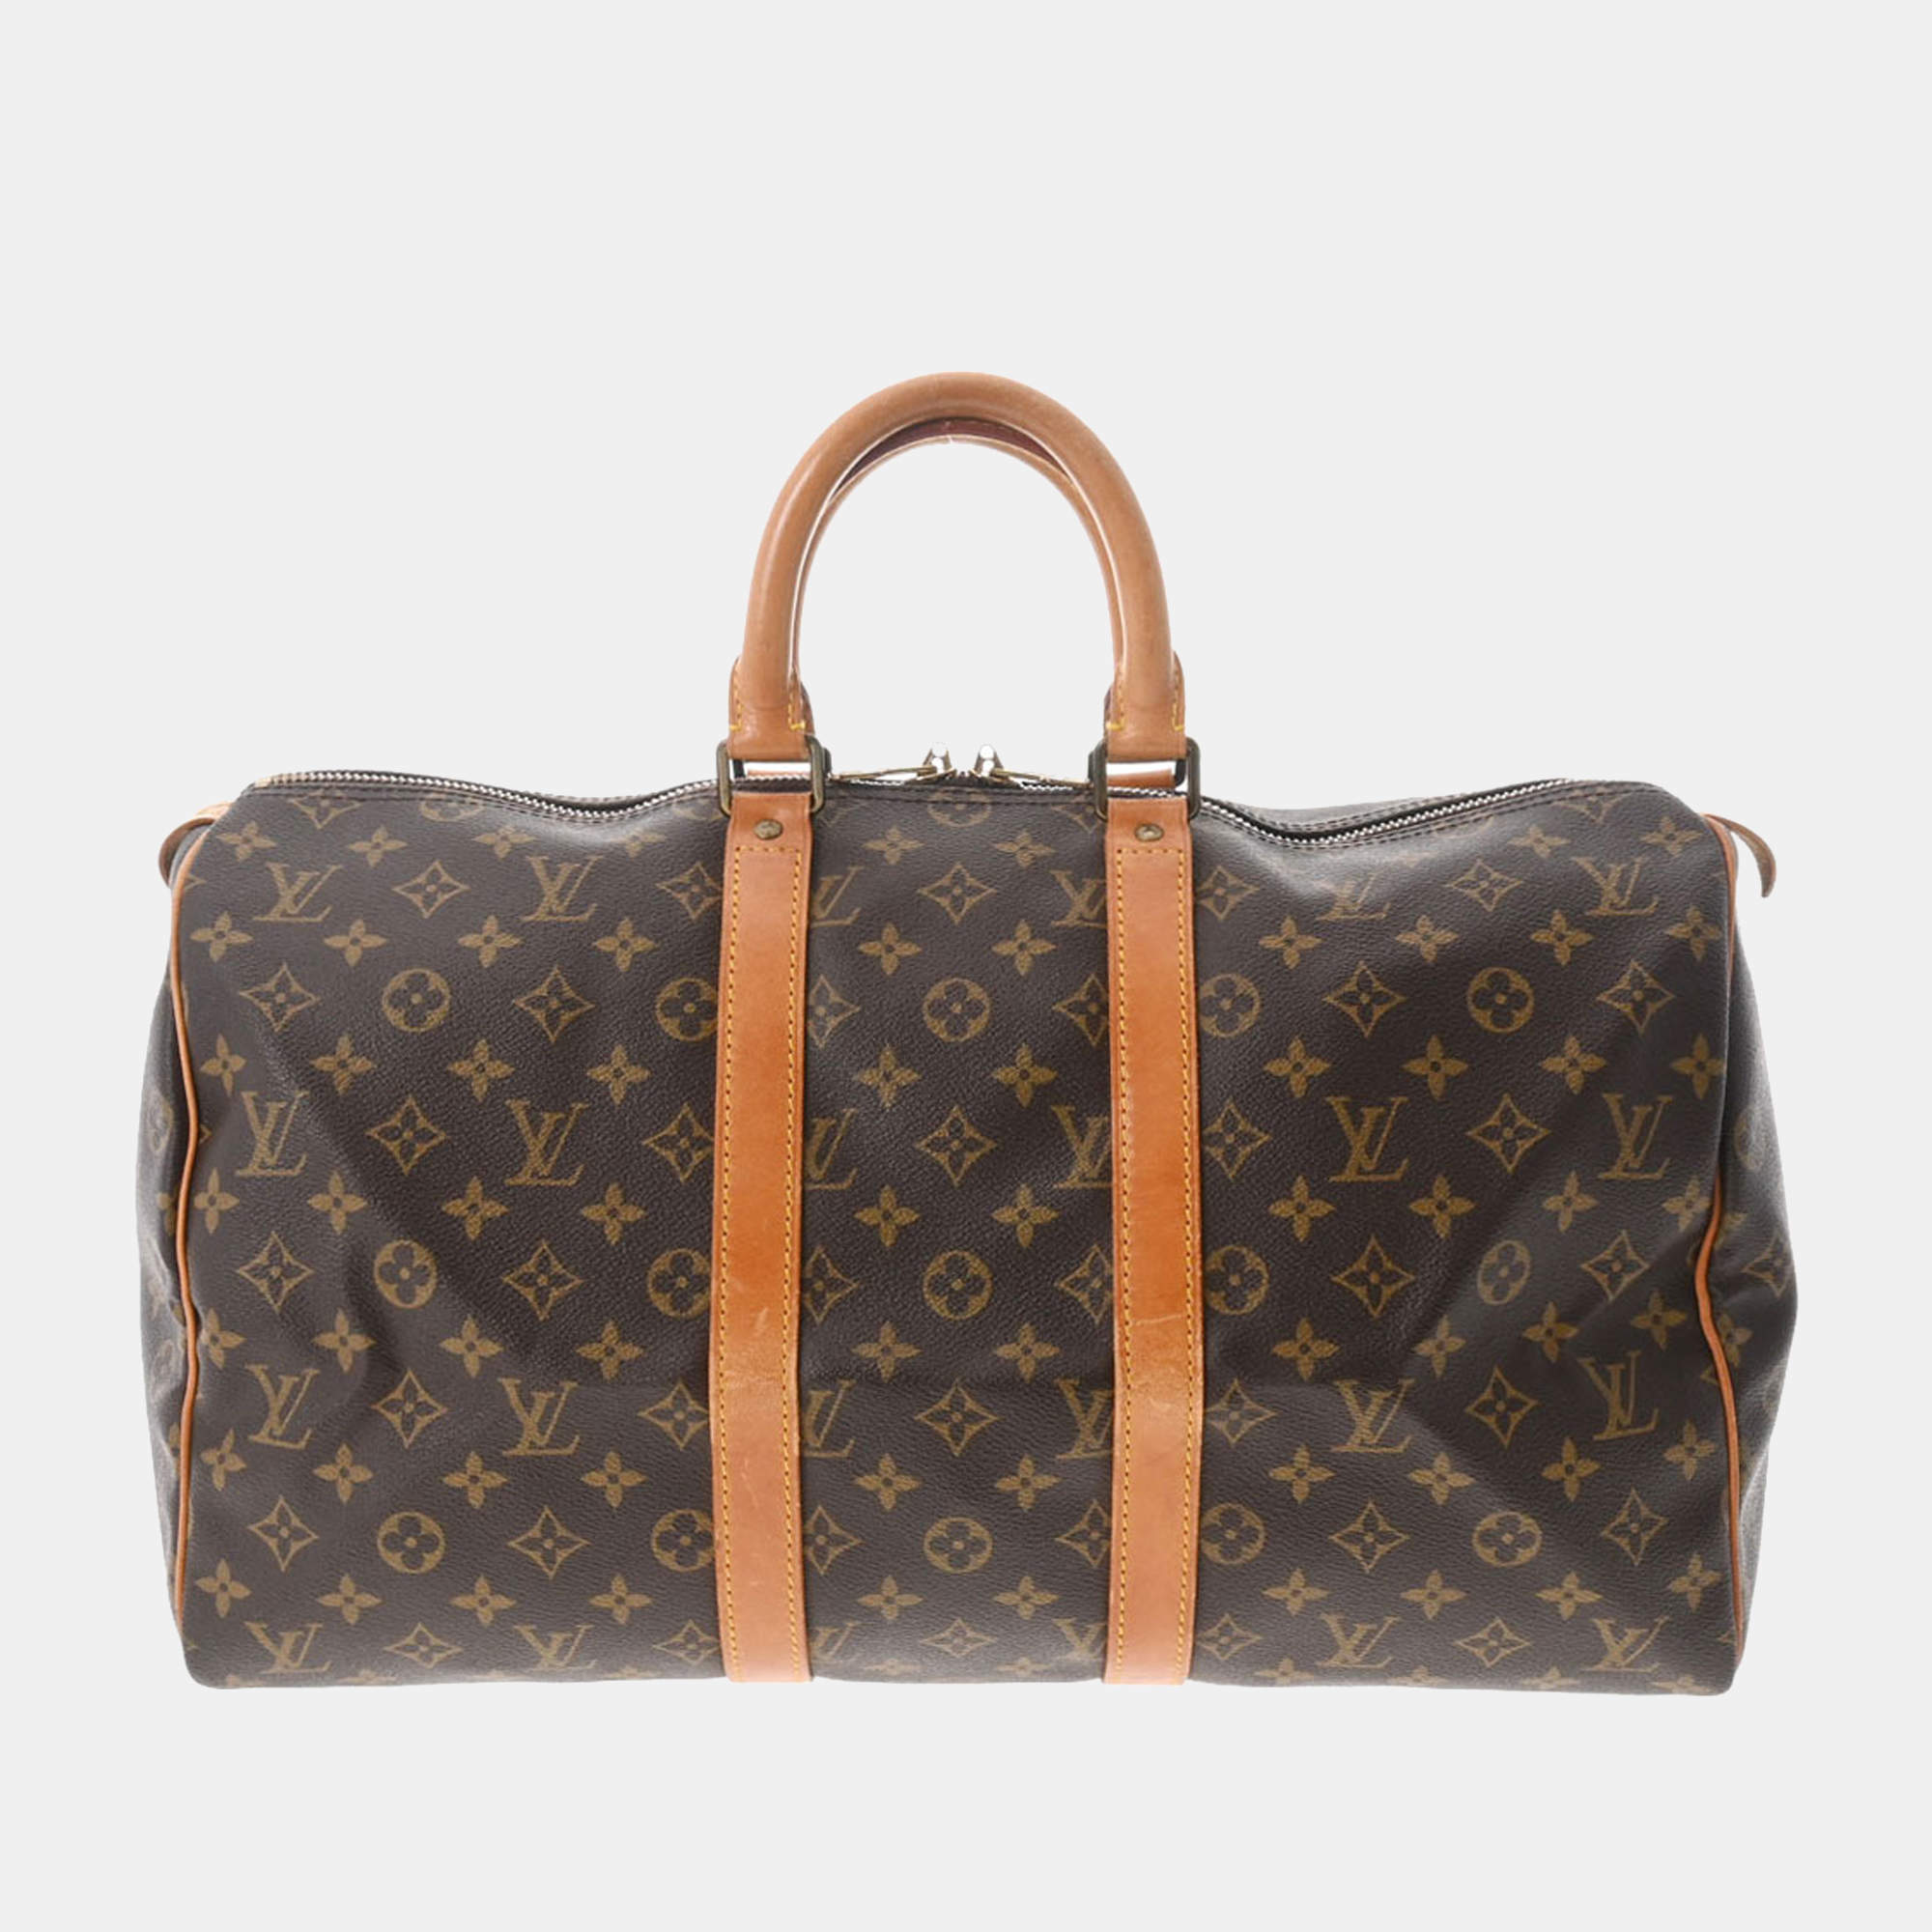 Louis Vuitton Keepall 45 Monogram Canvas Travel Bag Brown